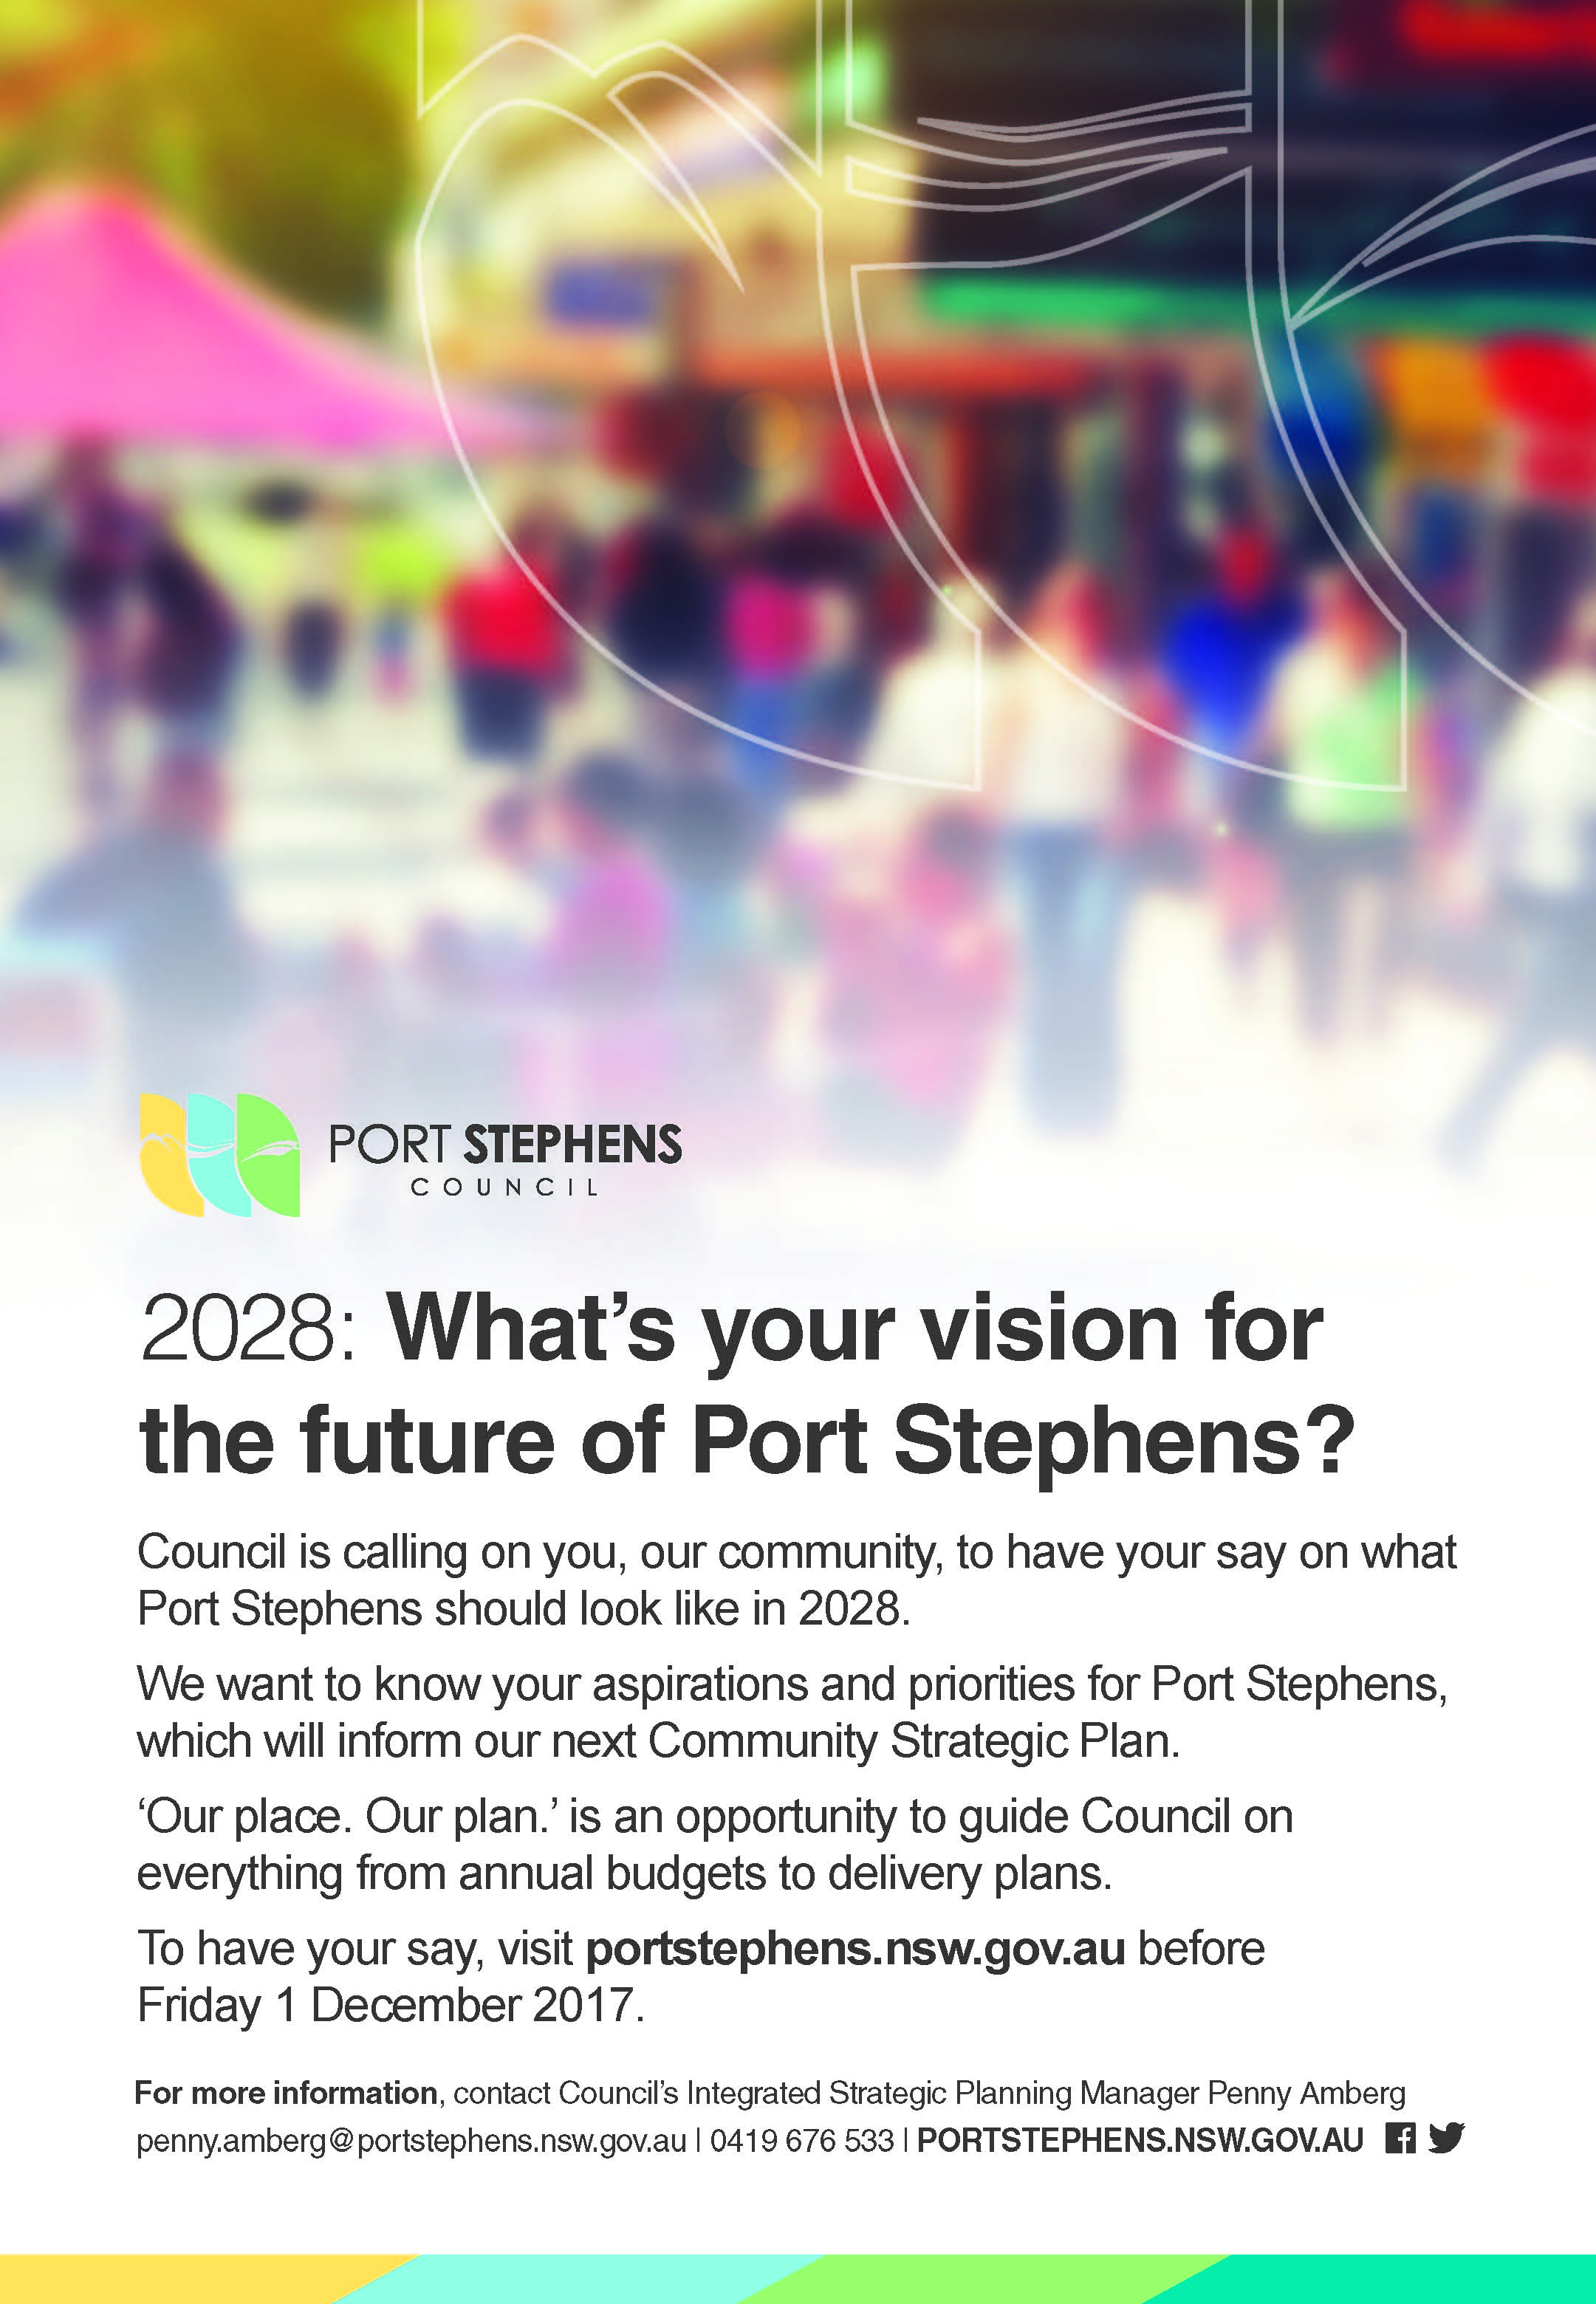 Port Stephens Council